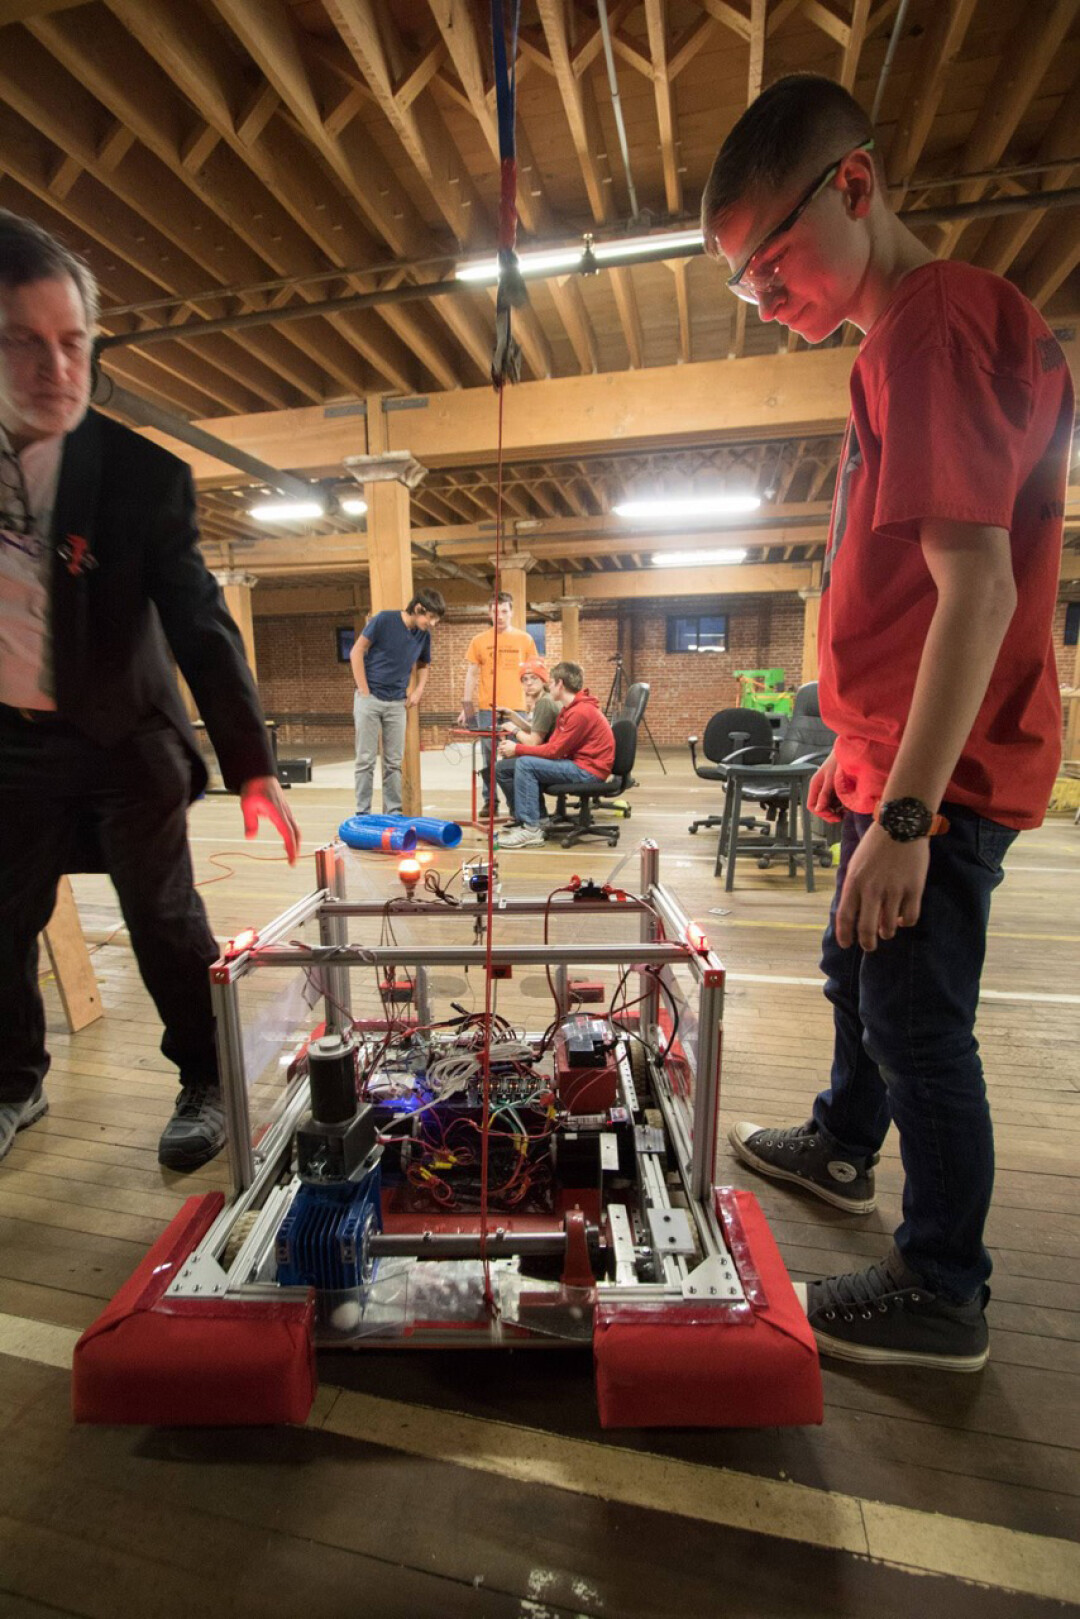 The Chippewa Falls FIRST Robotics Team at the MTC Makerspace in Chippewa Falls.